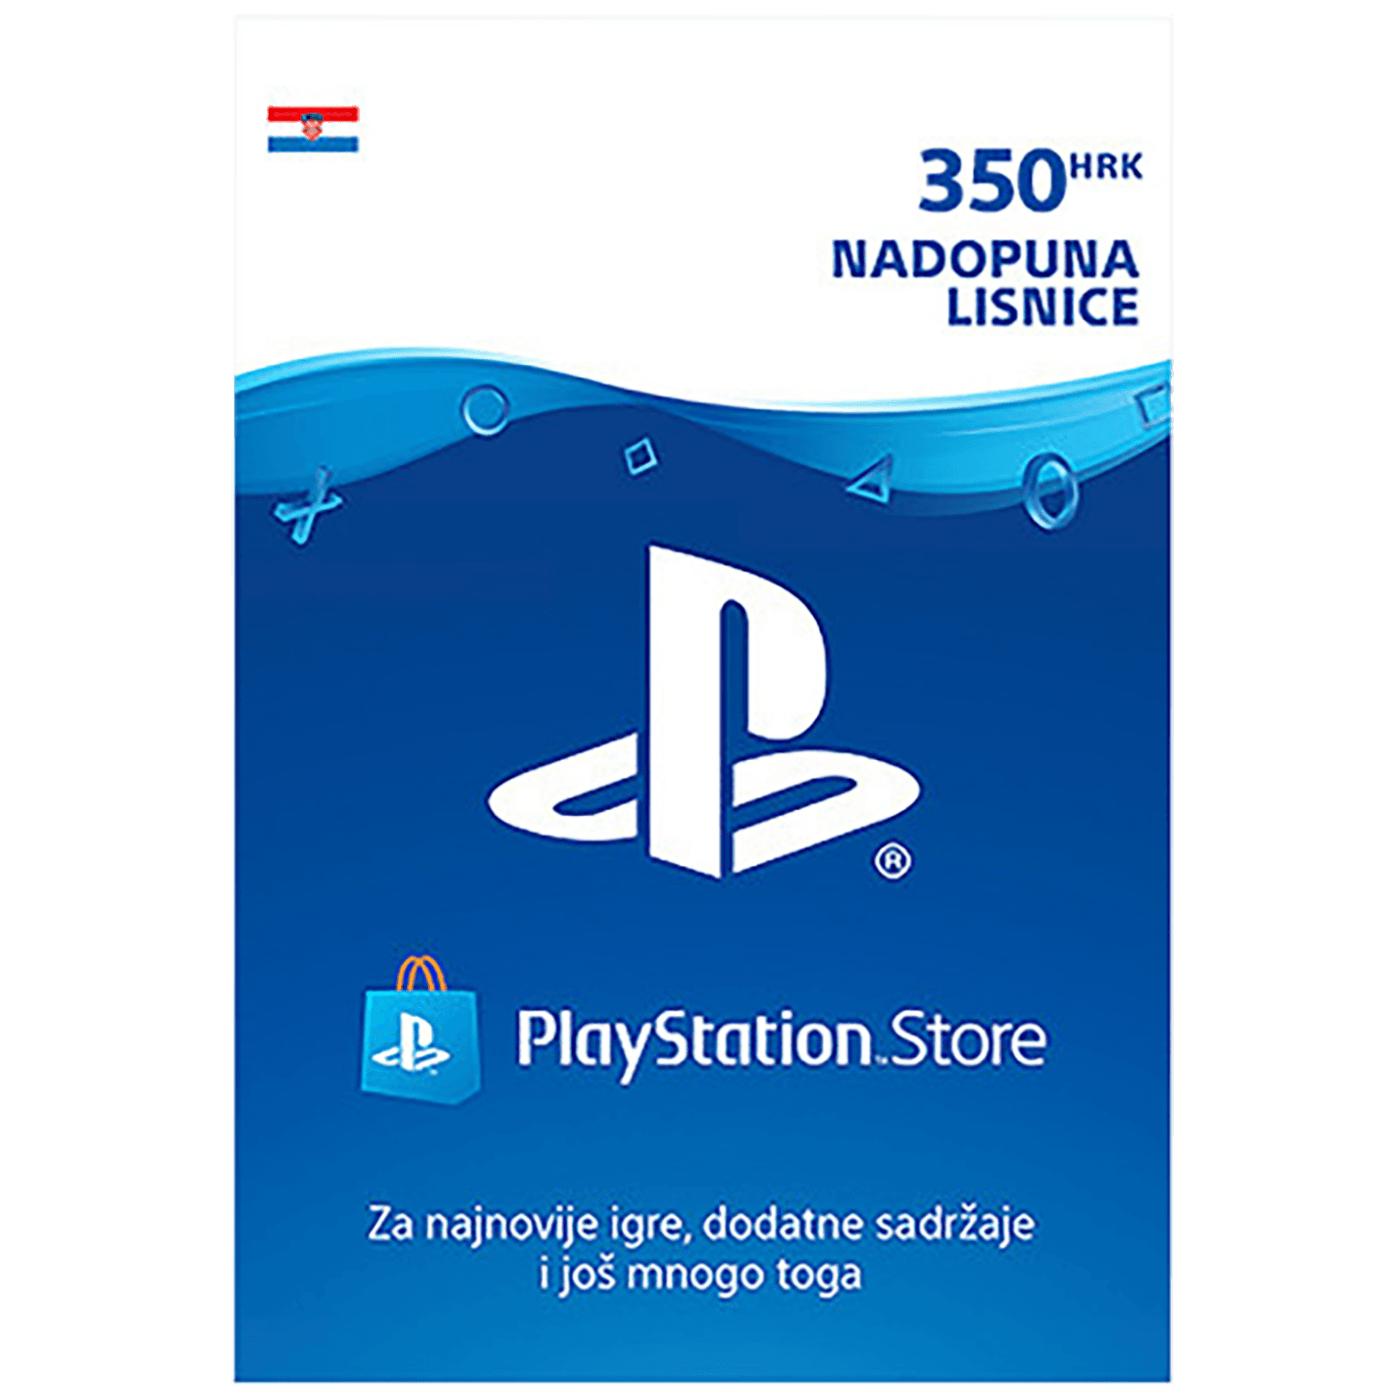 Nadopuna, PlayStation Live Card, HRK 350